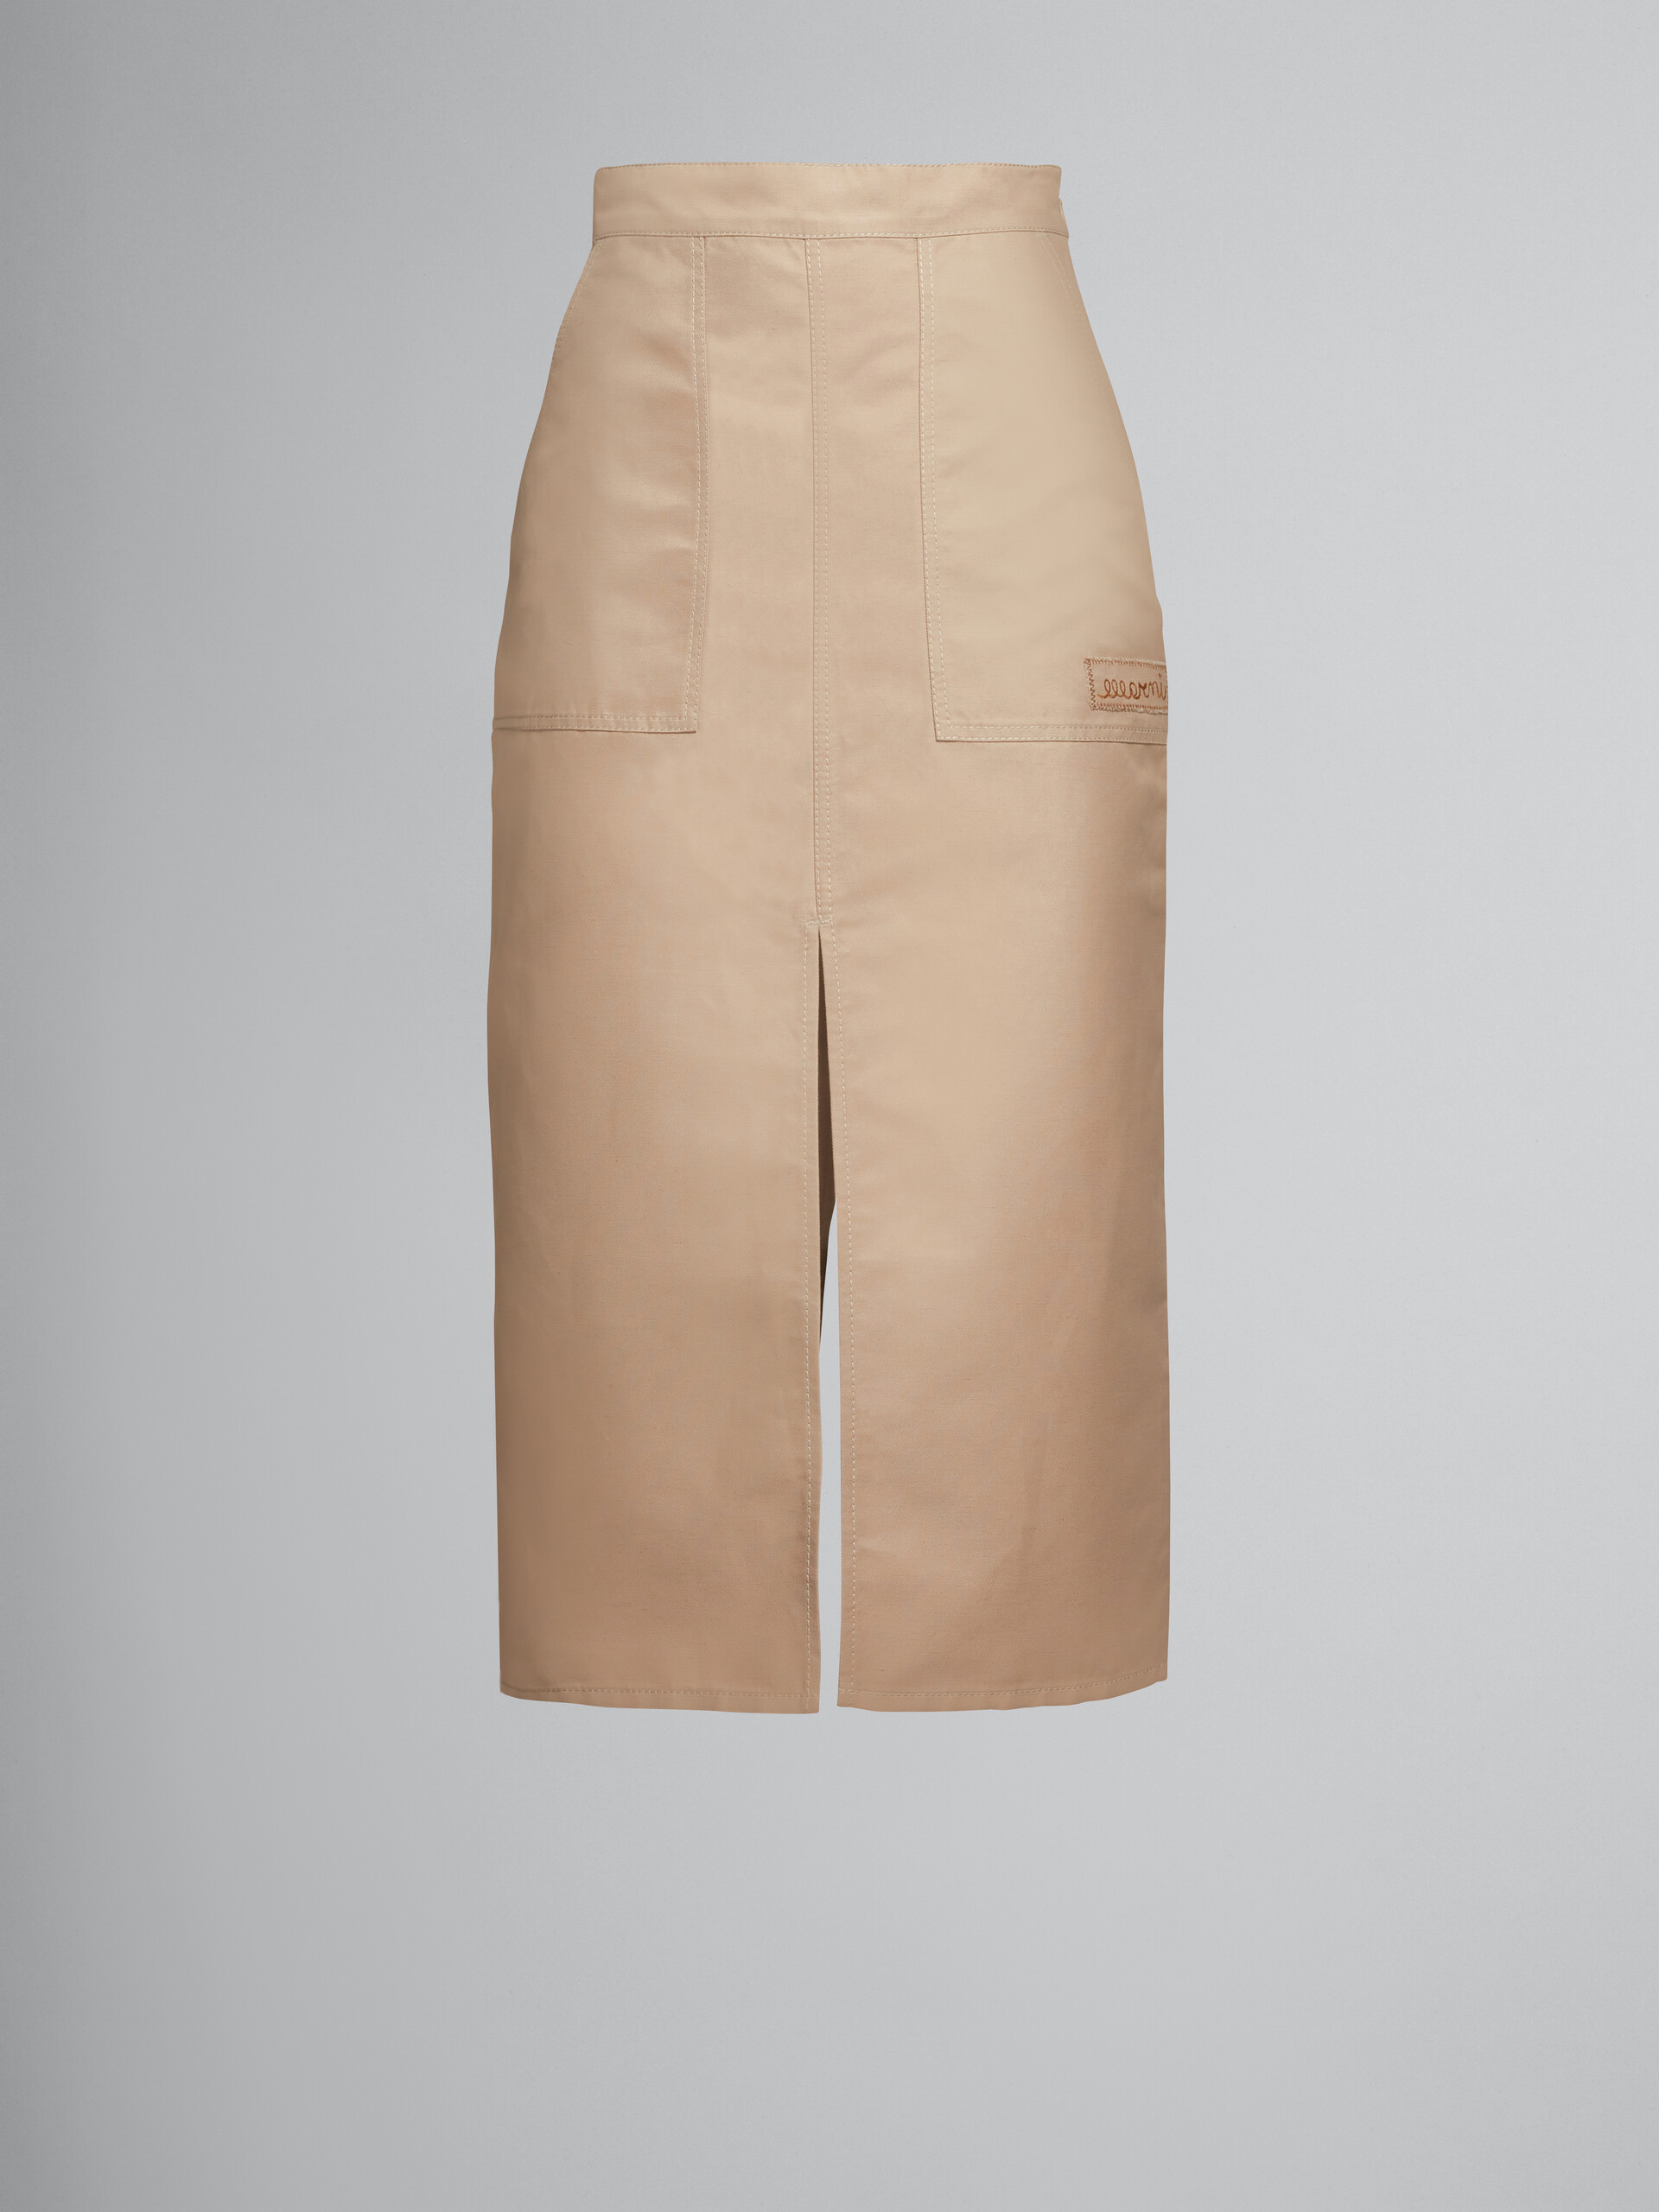 Beige skirt in technical cotton-linen - Skirts - Image 1